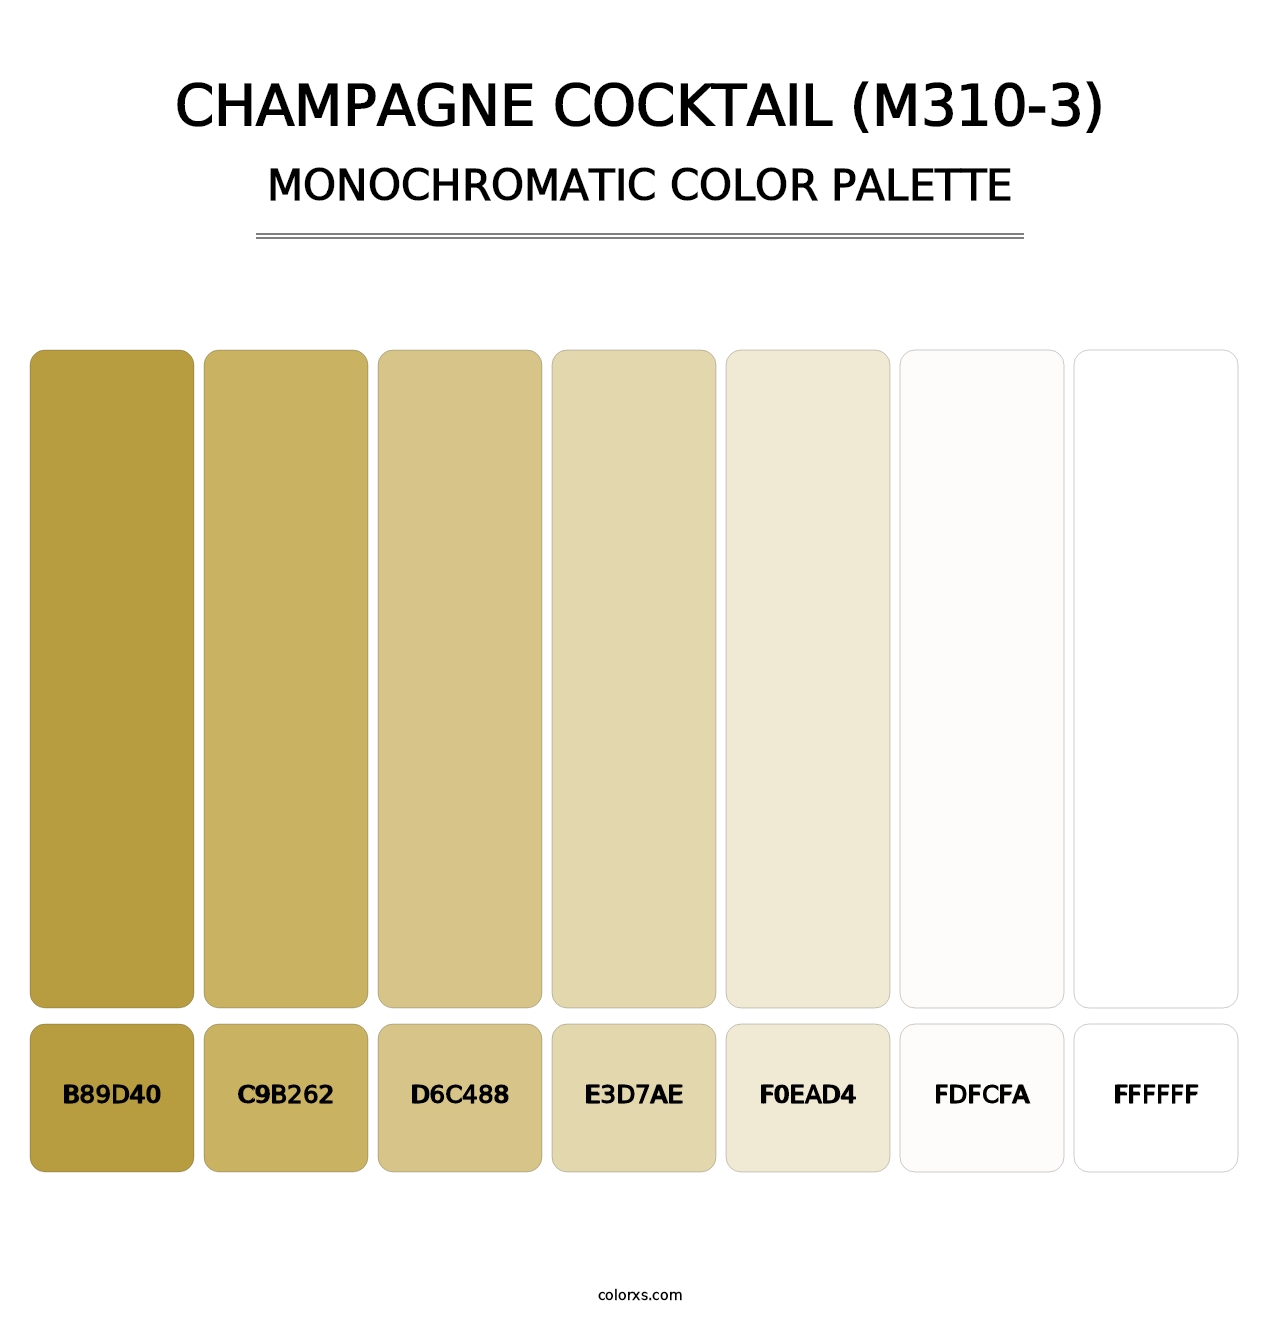 Champagne Cocktail (M310-3) - Monochromatic Color Palette